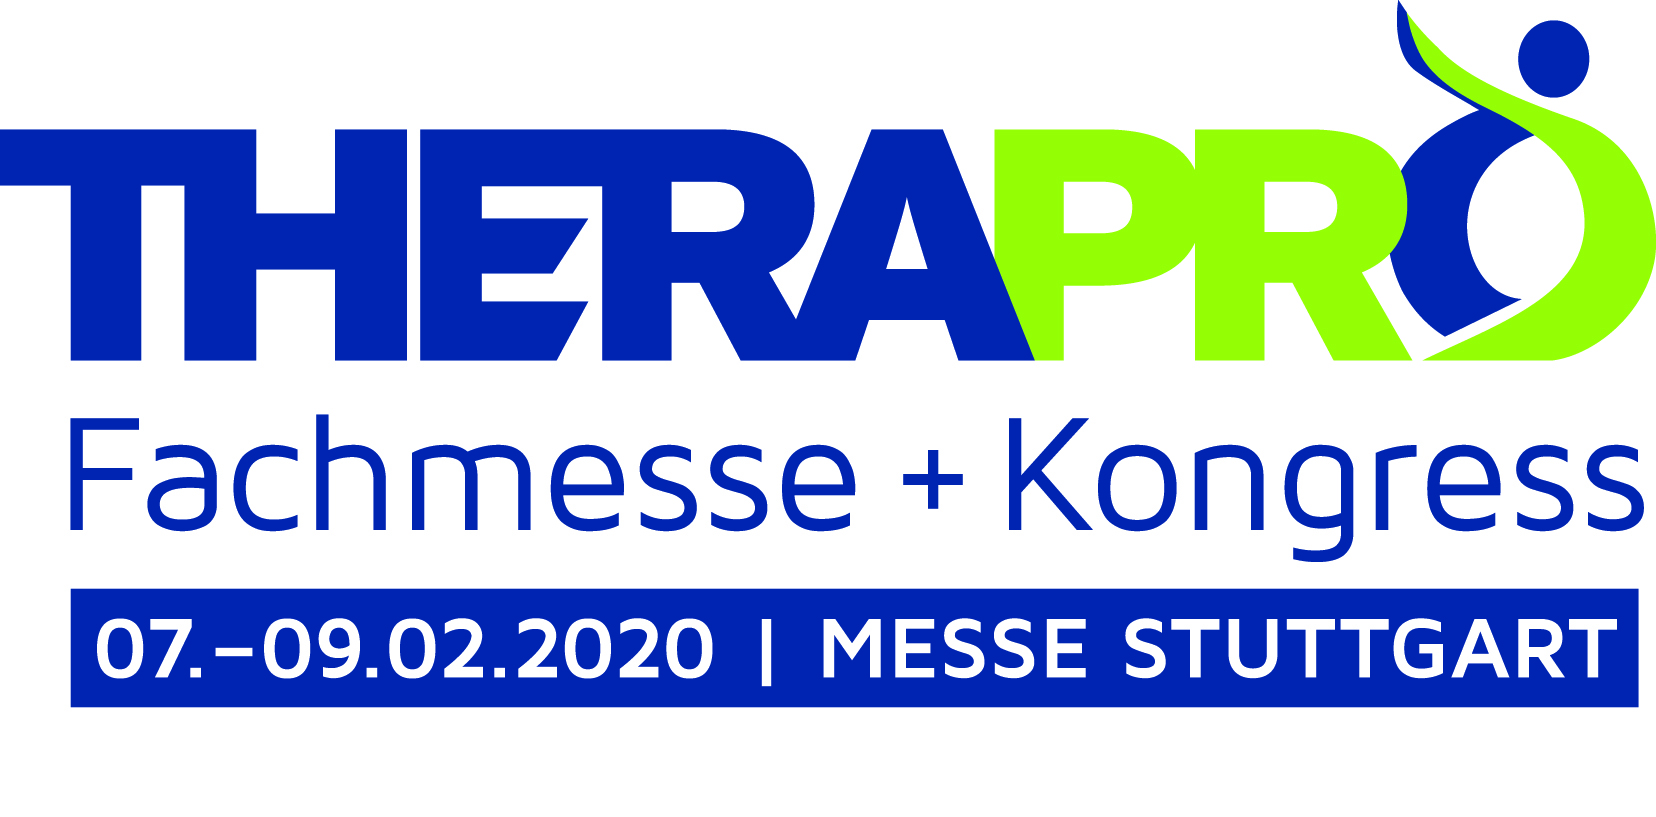 Logo Therapro